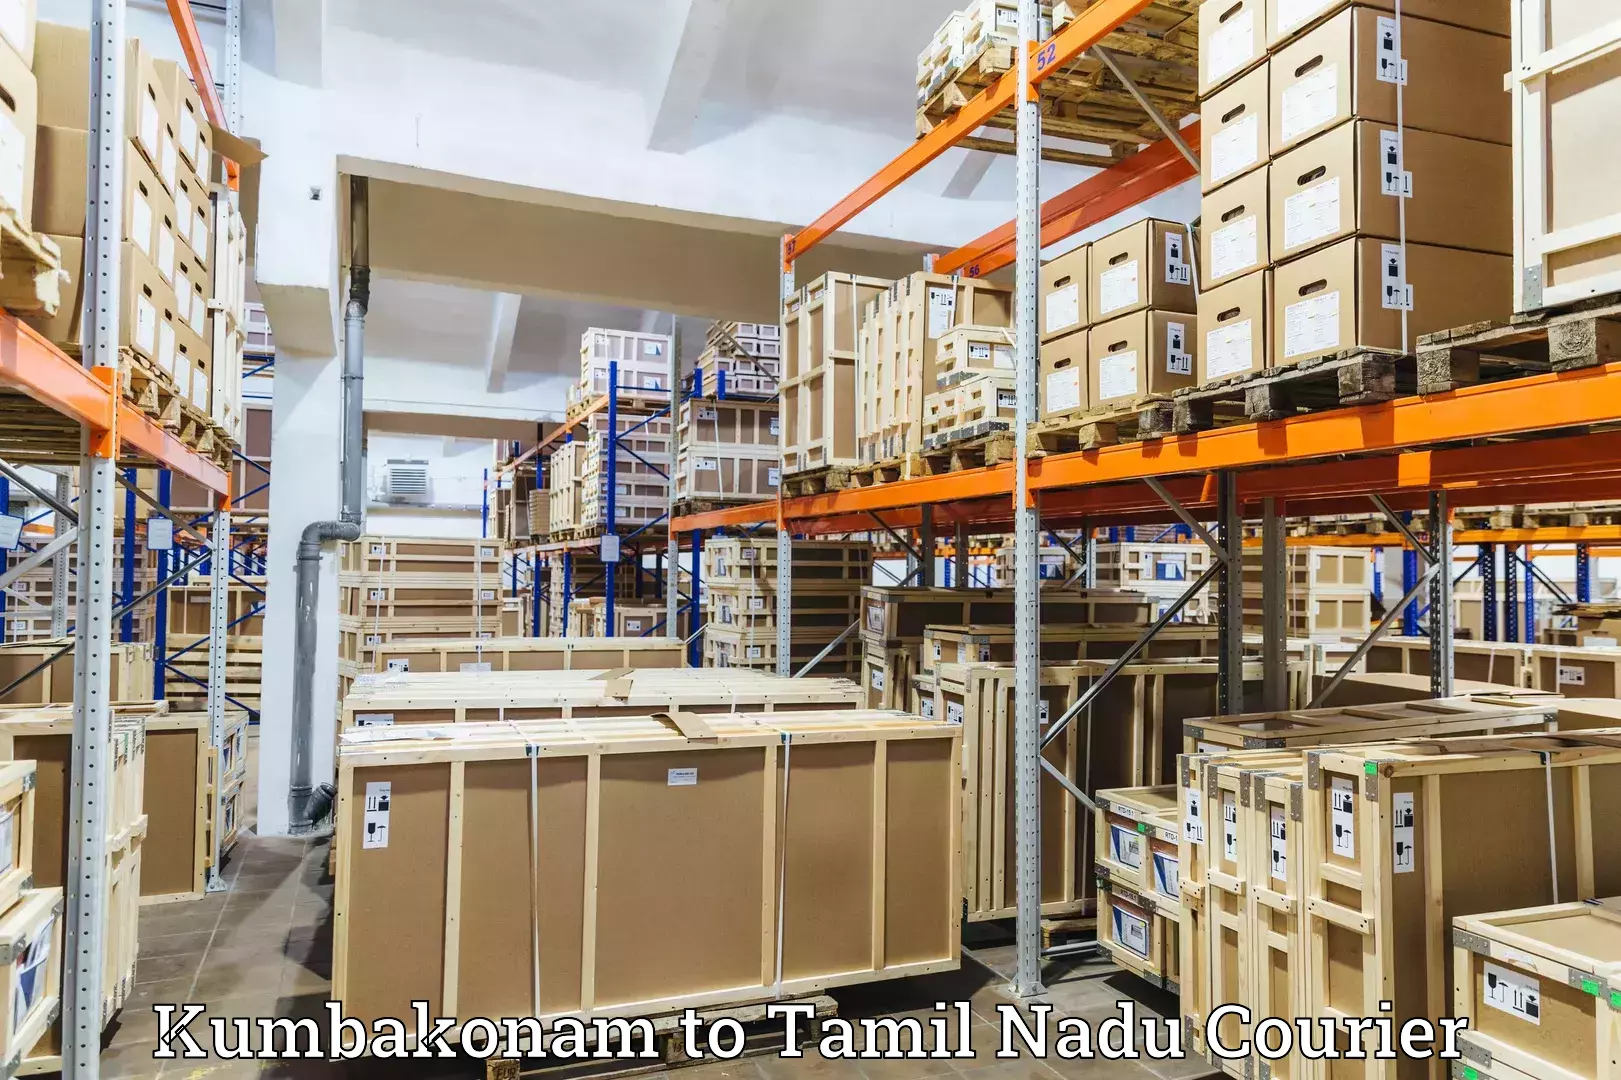 Courier service partnerships in Kumbakonam to Tamil Nadu